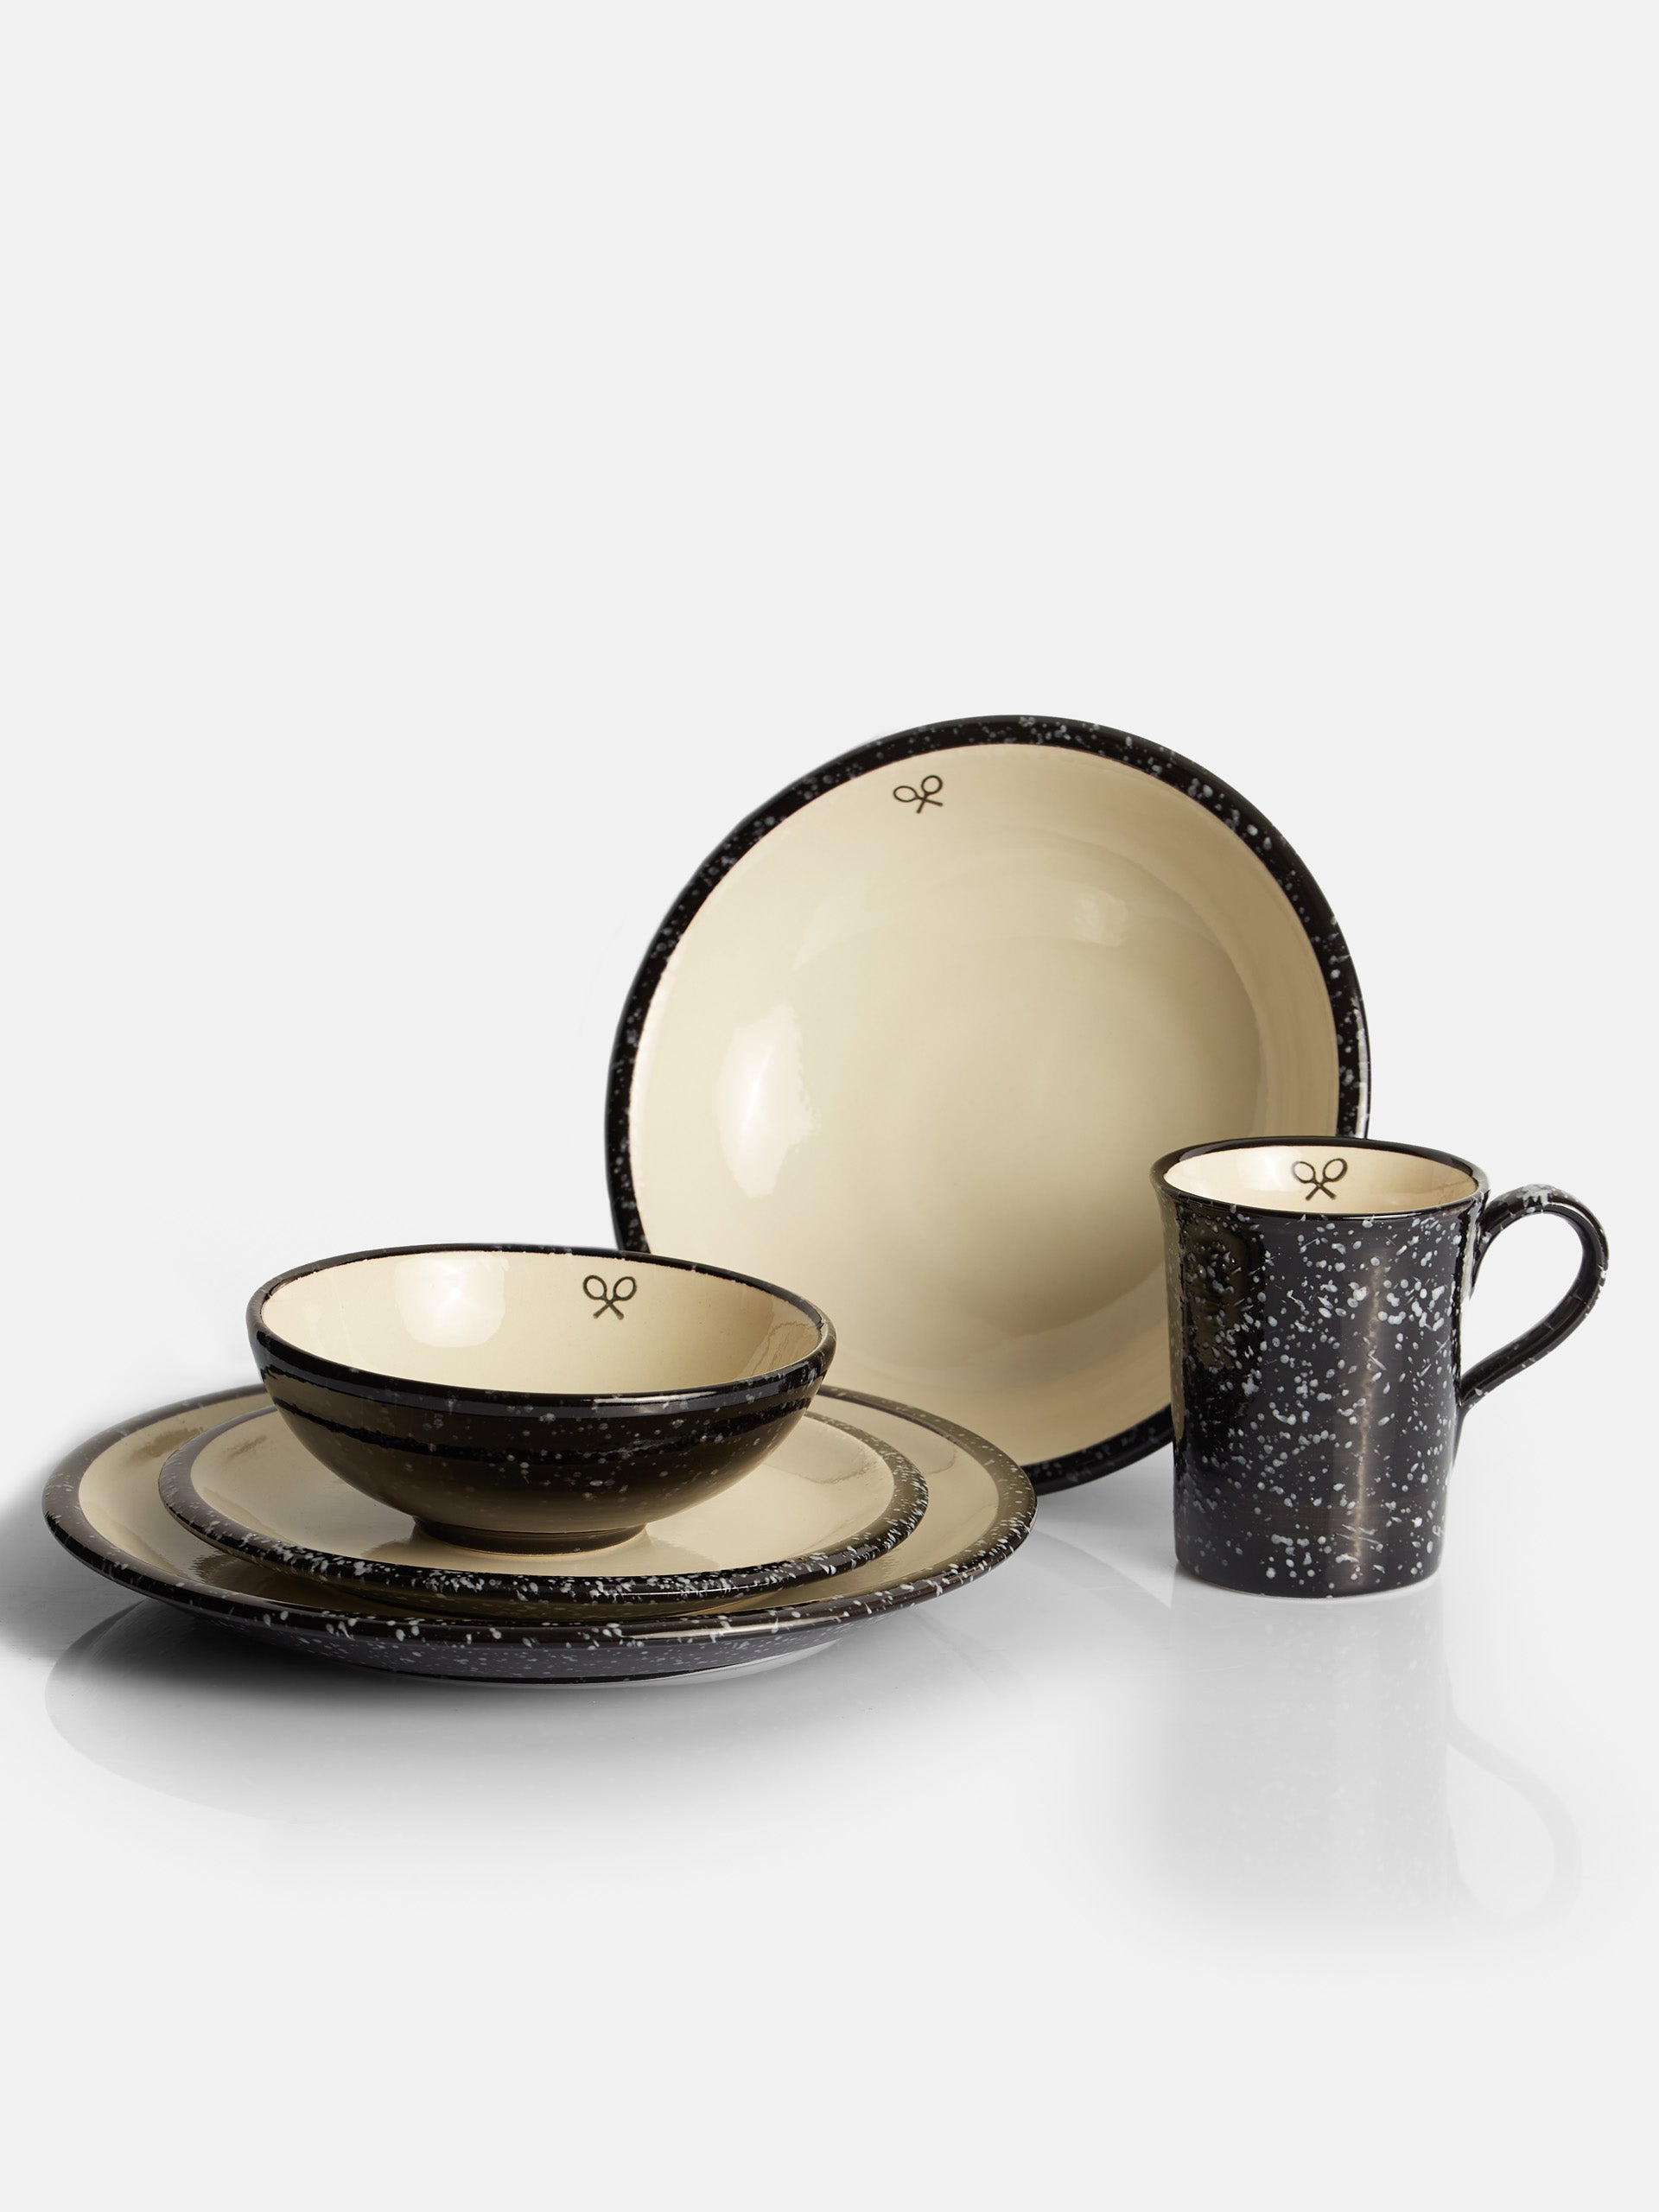 Two-tone enamel ceramic mug